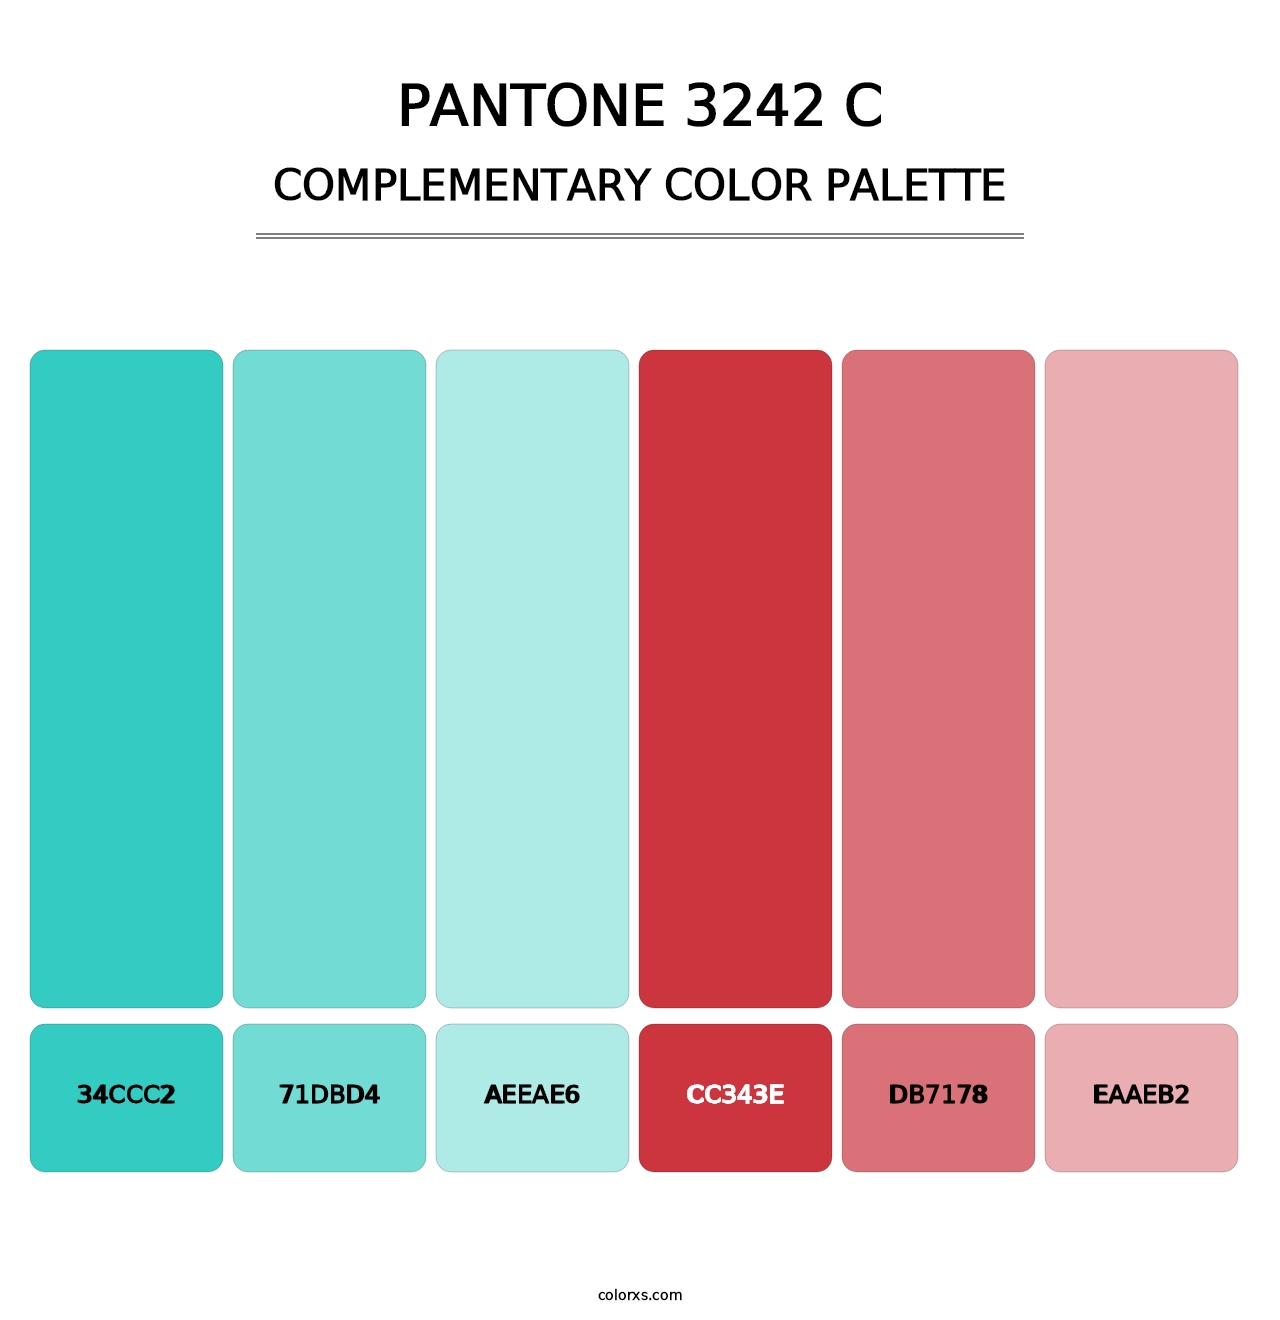 PANTONE 3242 C - Complementary Color Palette